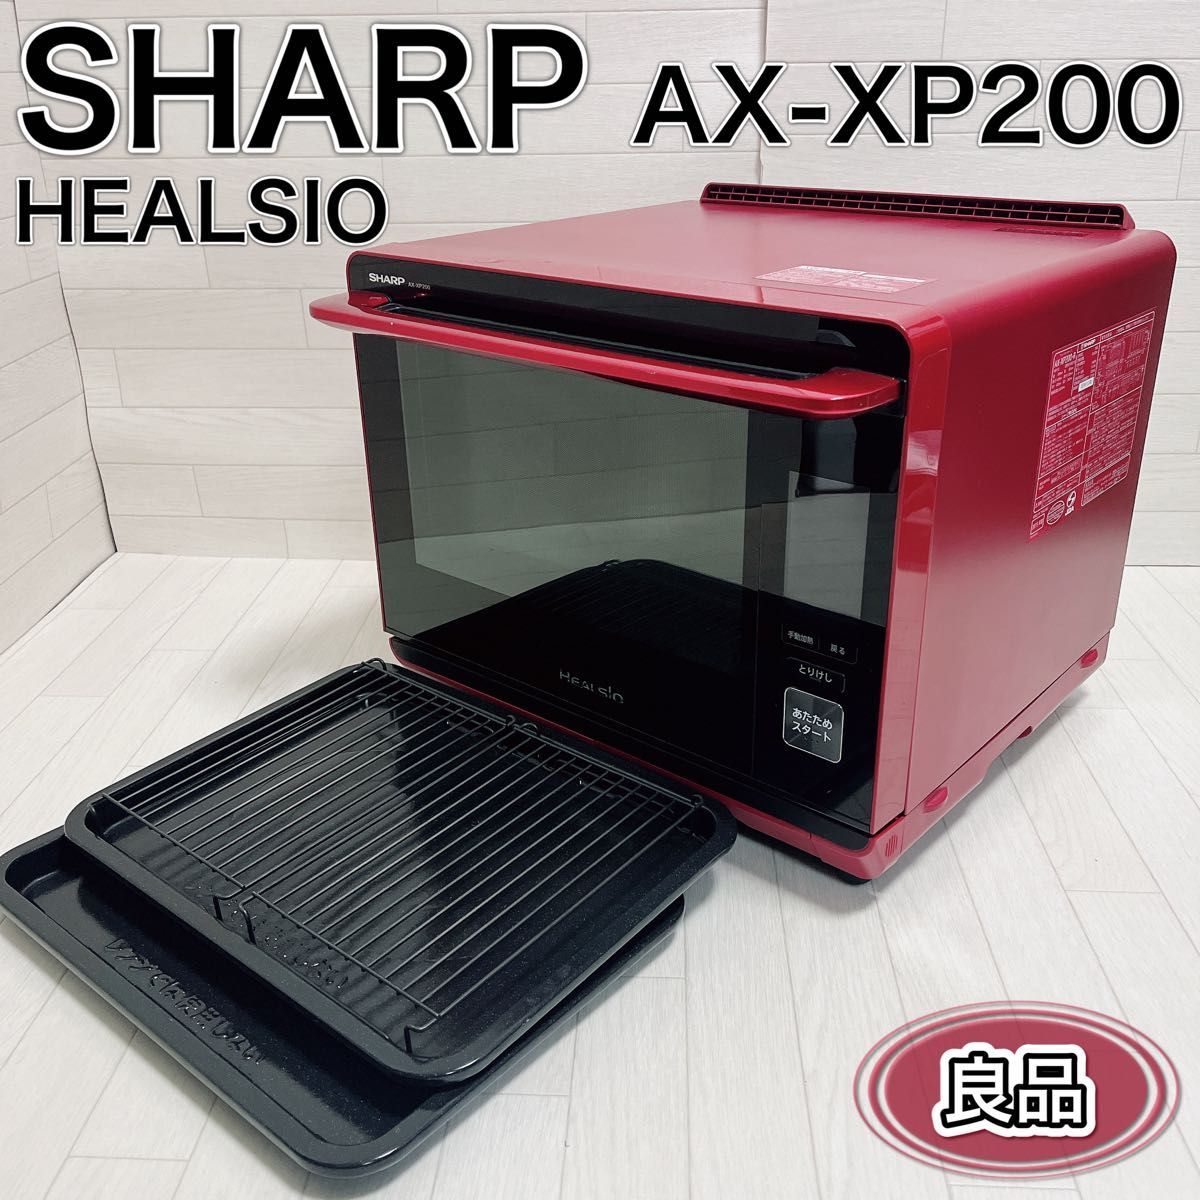 SHARP AX-XP200 вода печь ад sio пар печь 